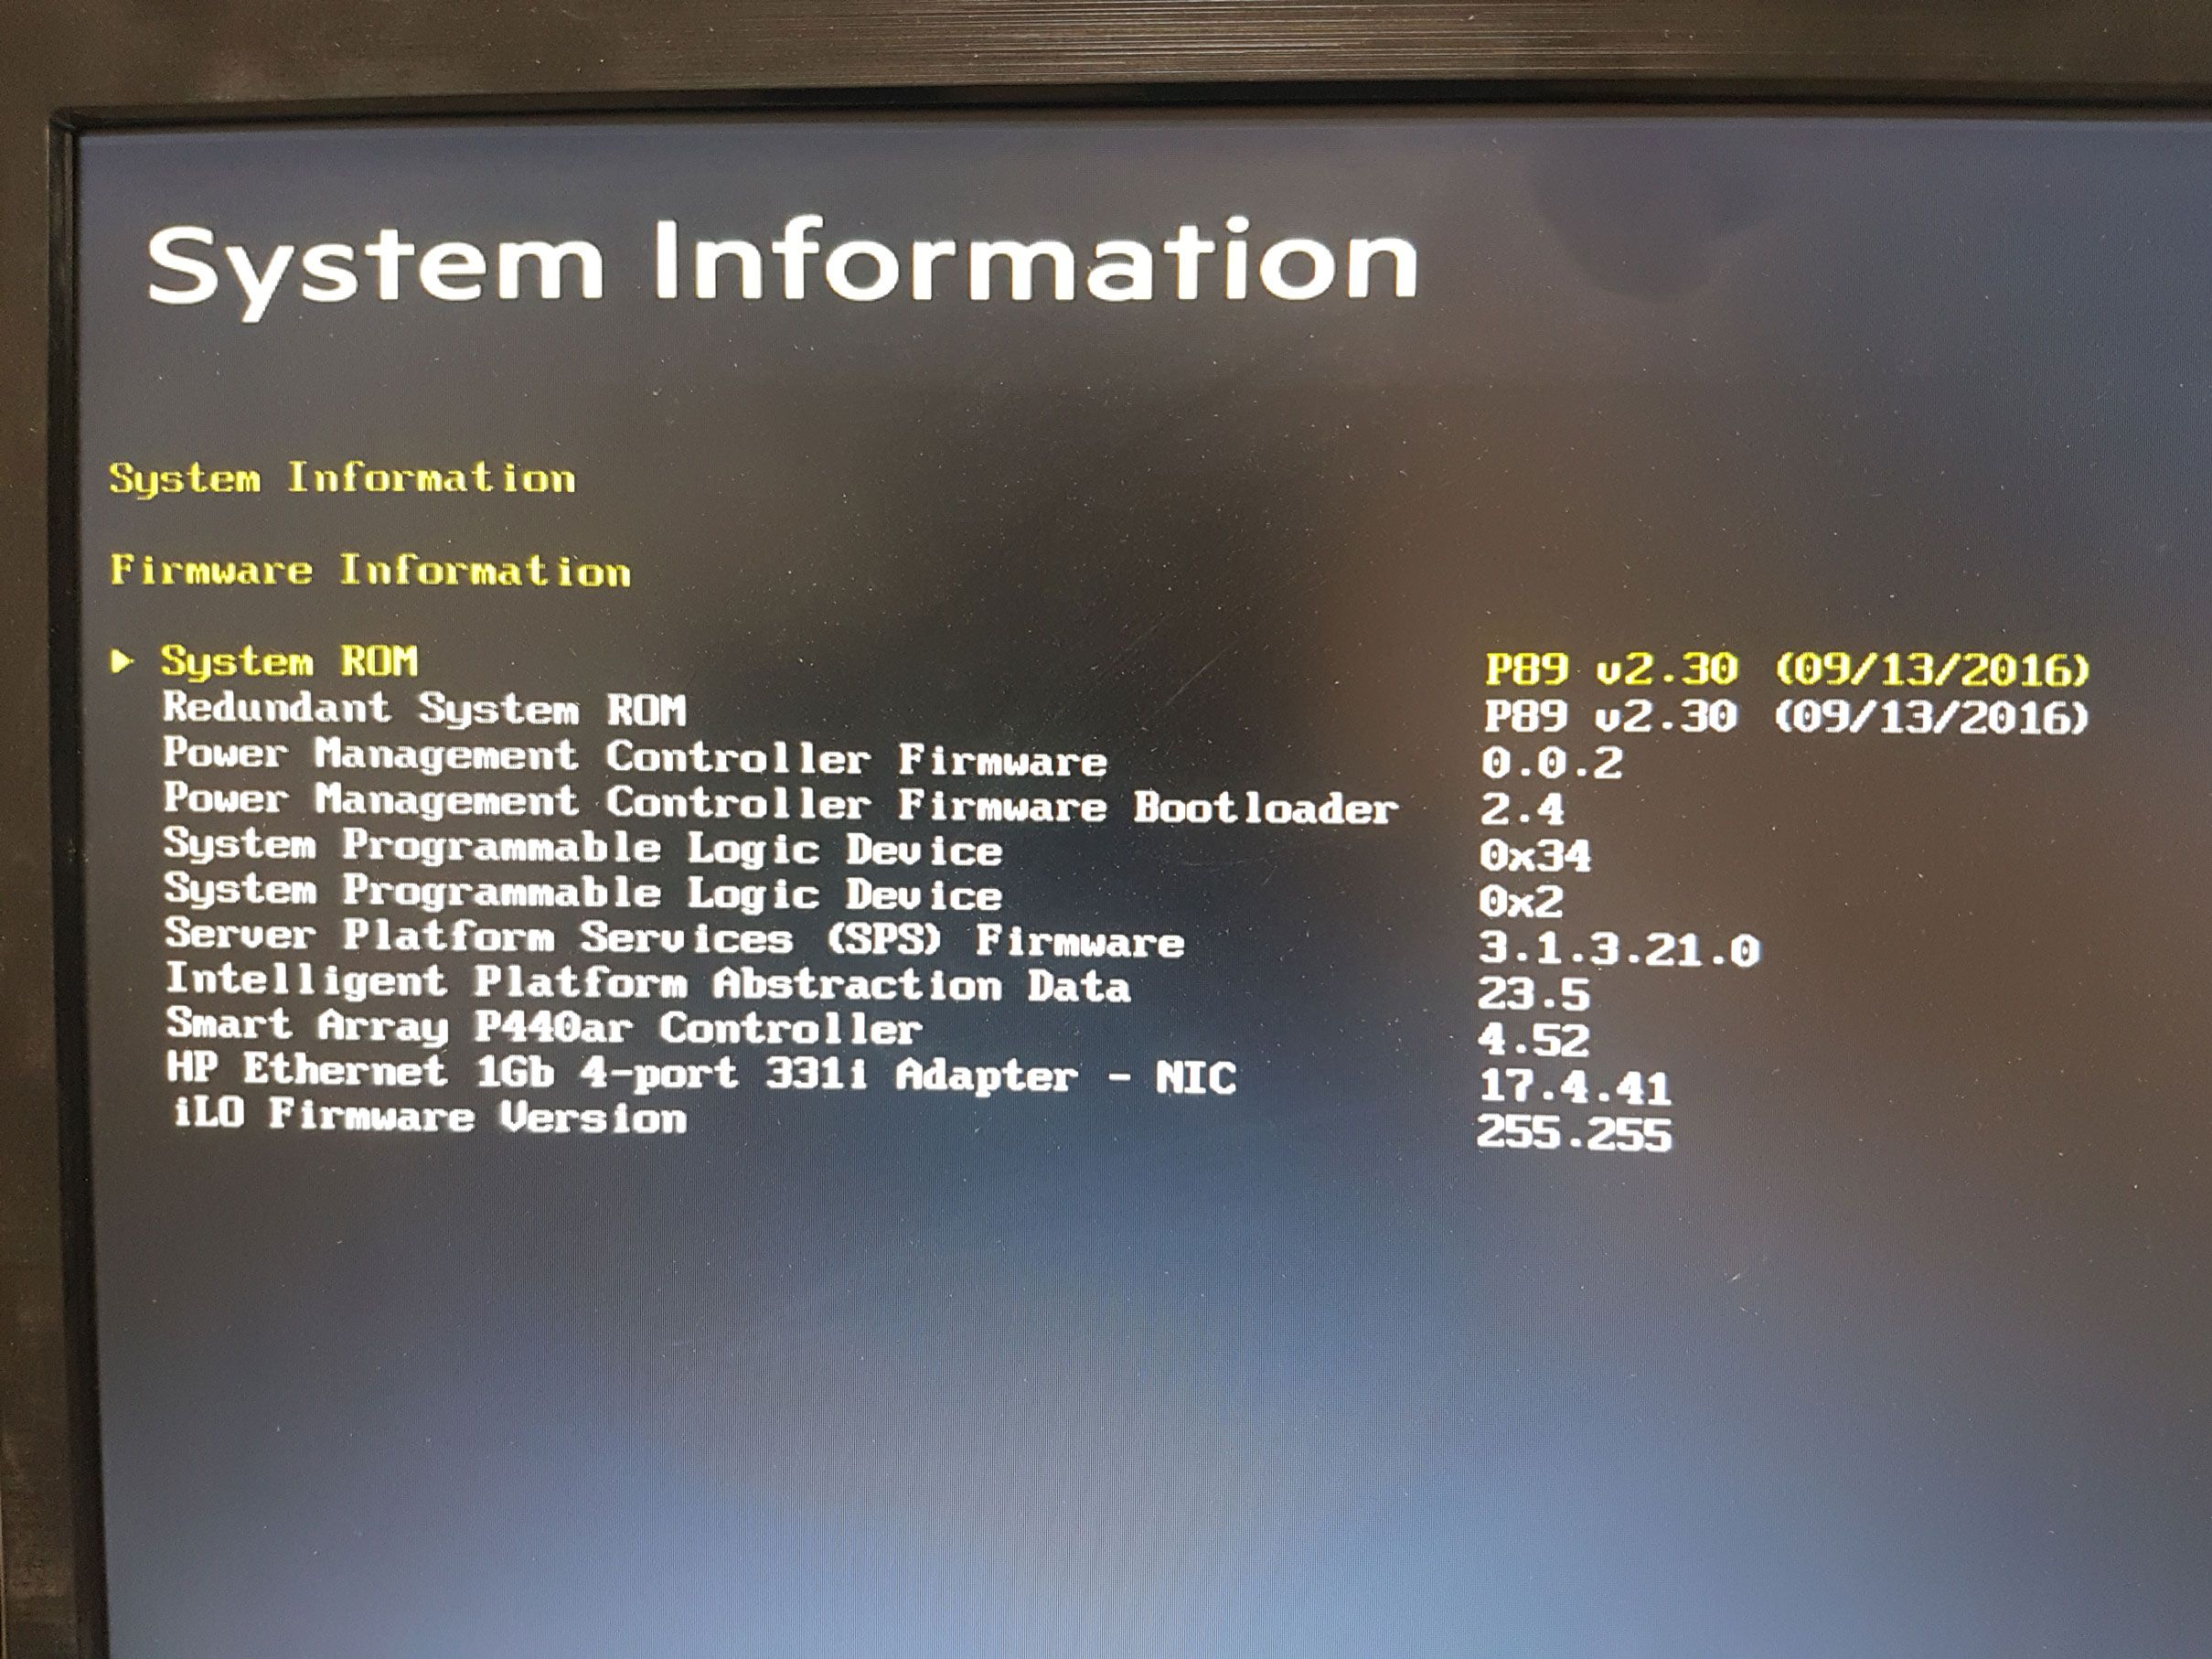 Can't update BIOS or iLO on DL380p G9 - Hewlett Packard Enterprise Community